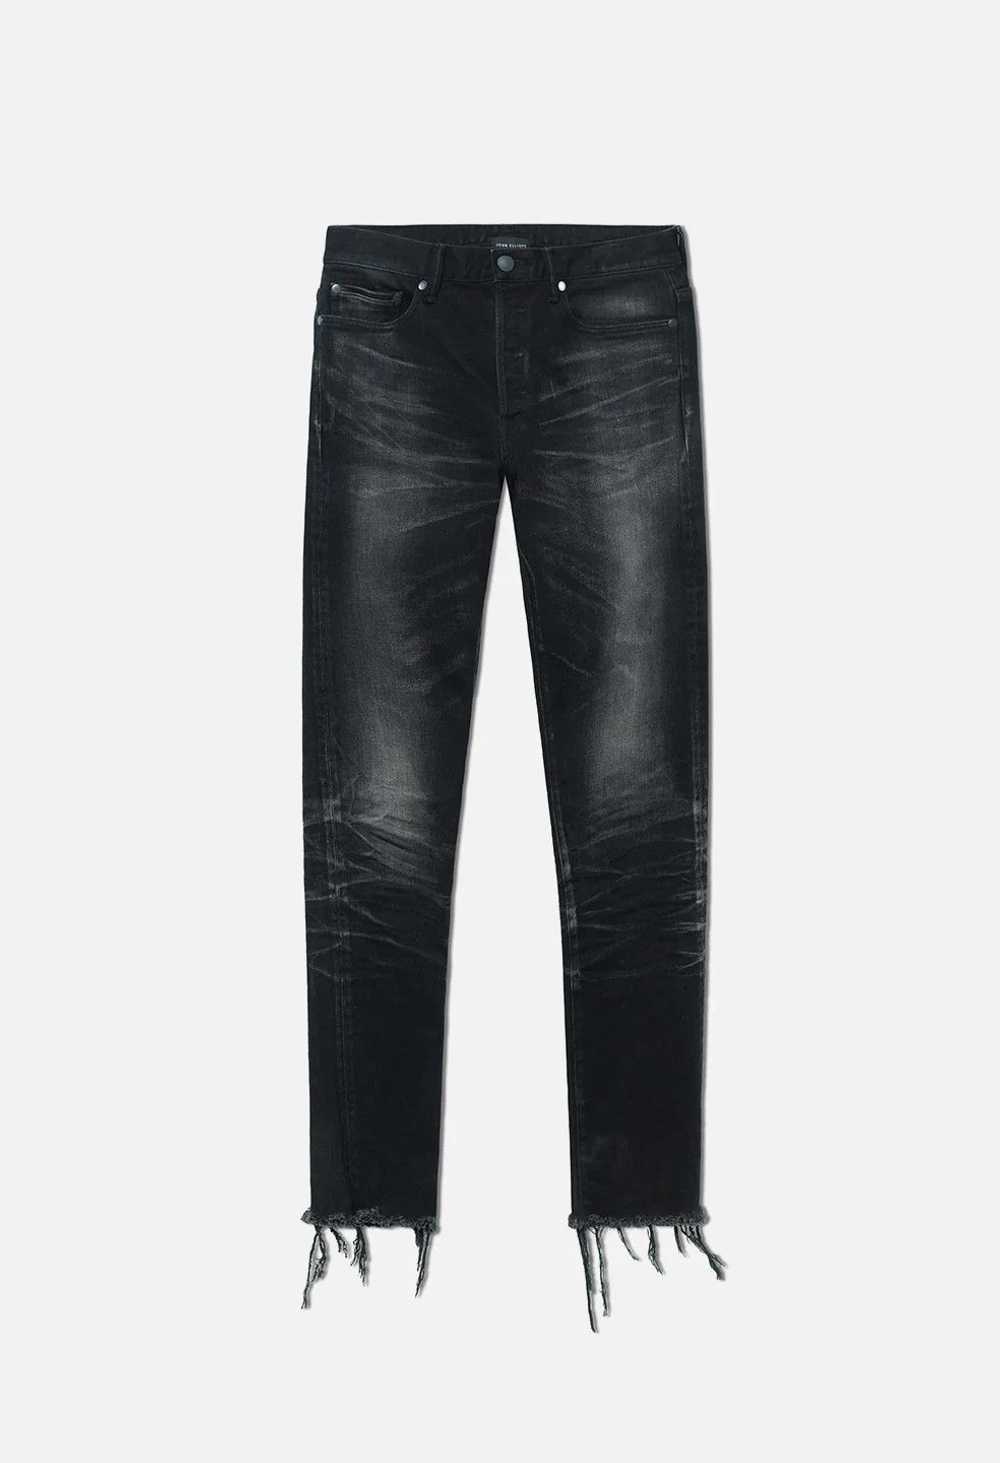 John Elliott Jeans, new with tags - image 9